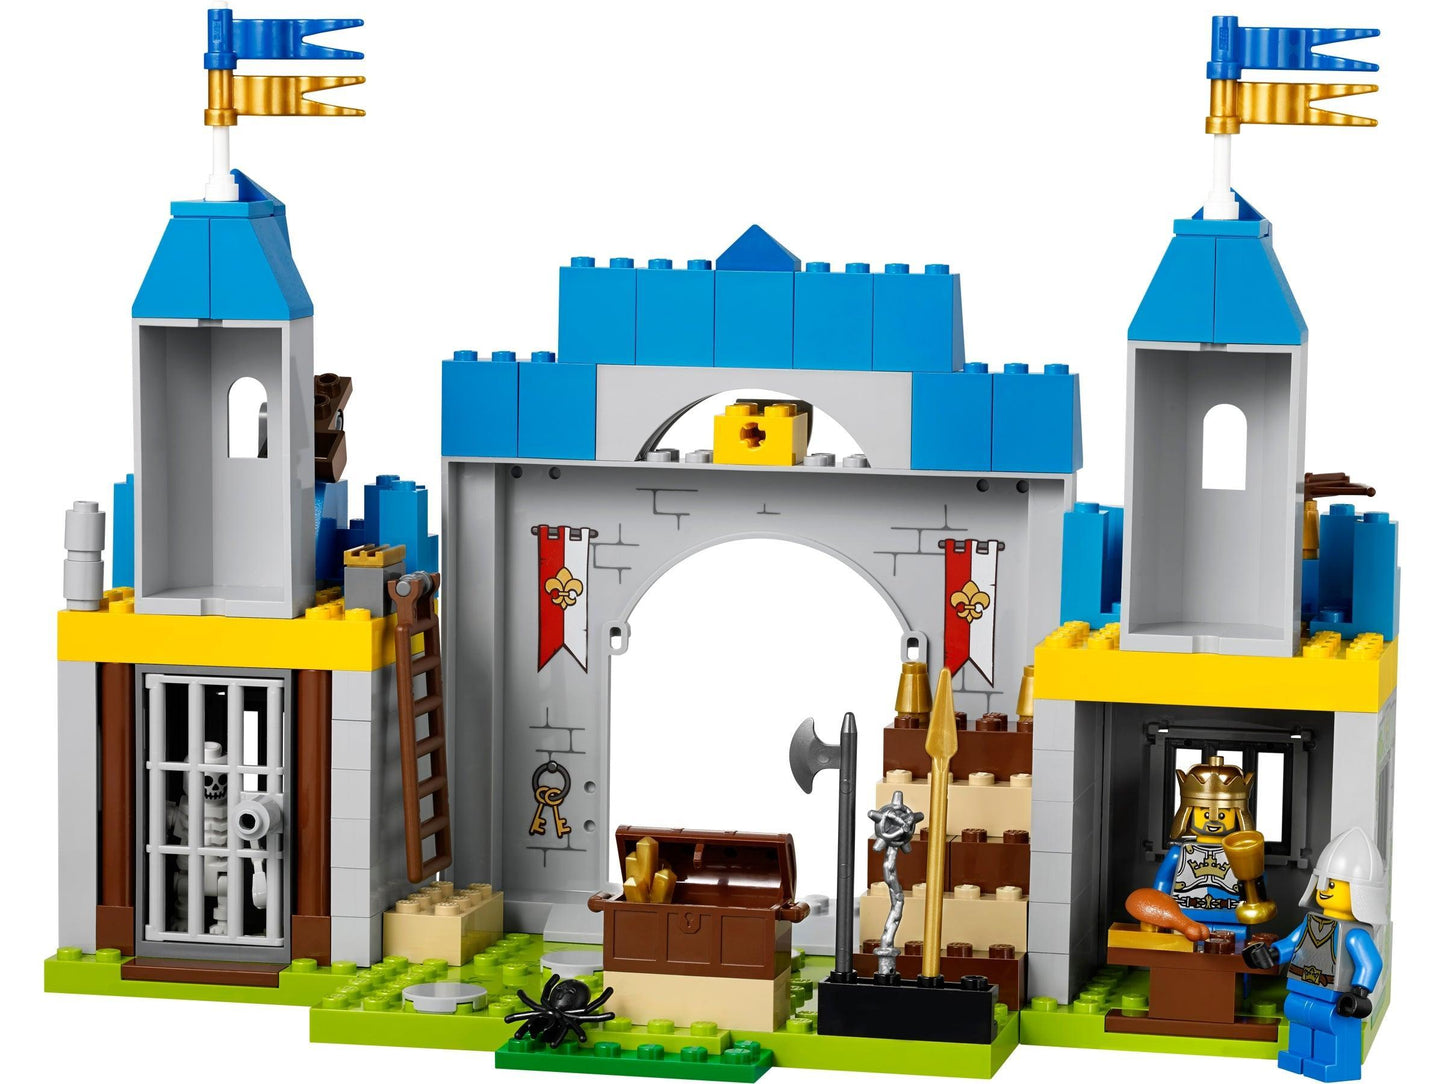 LEGO Knights' Castle 10676 Juniors | 2TTOYS ✓ Official shop<br>